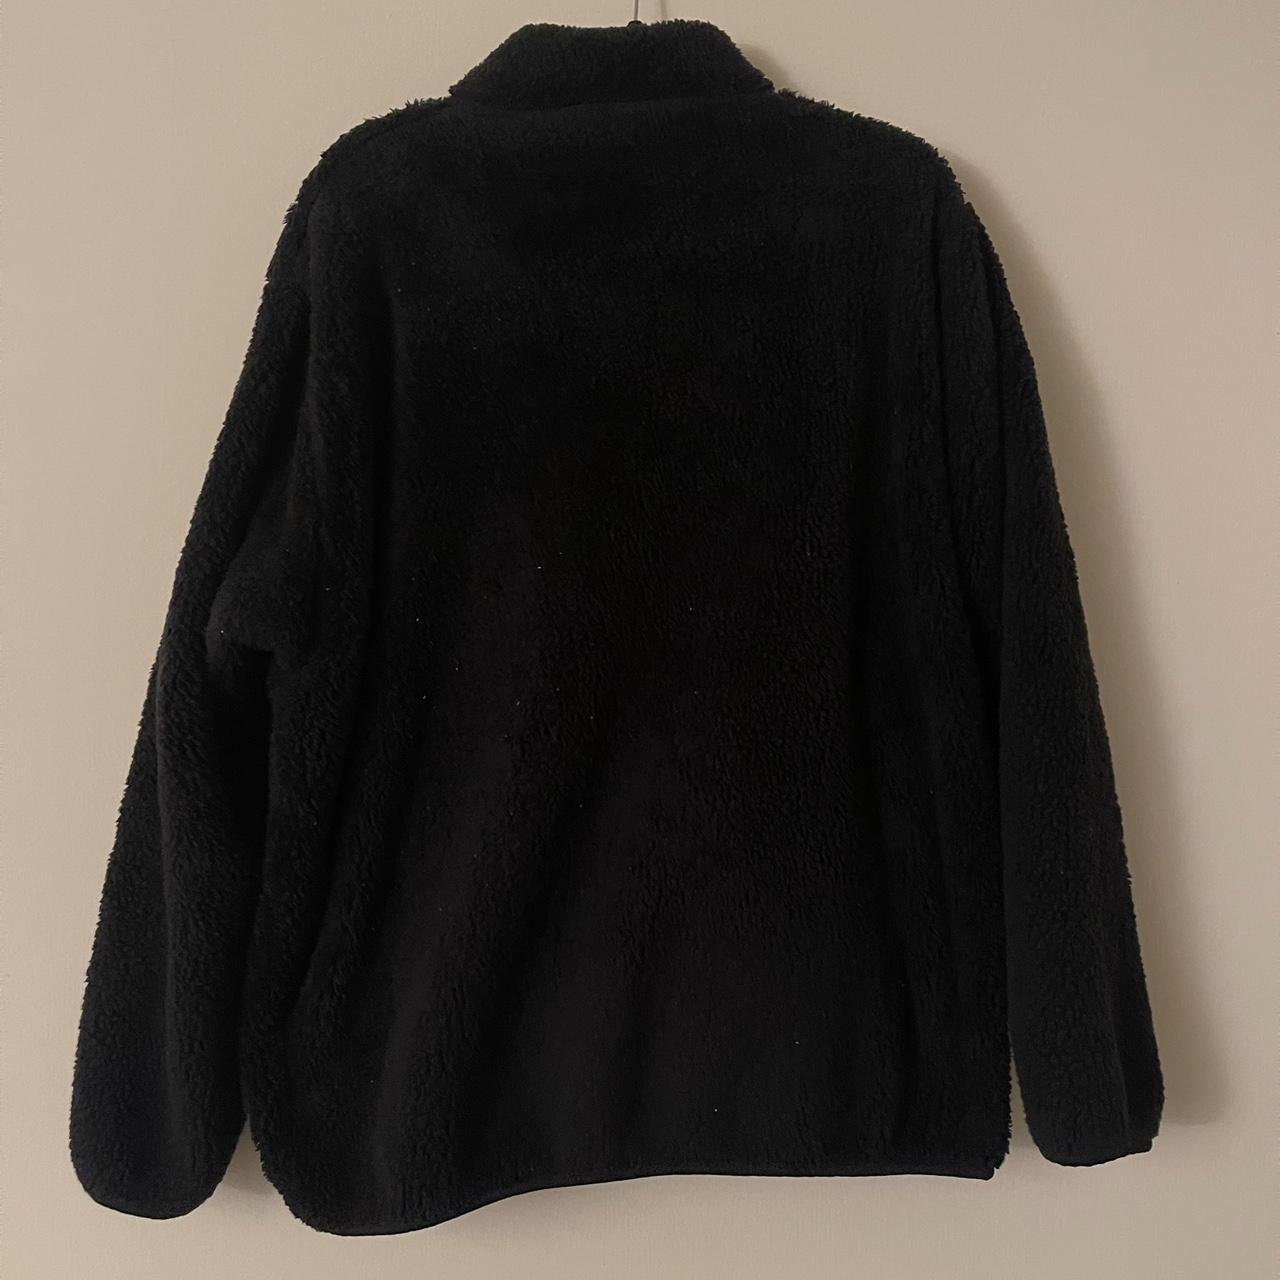 uniqlo fleece jacket $17.40 (FOR SALE) - retail $30... - Depop